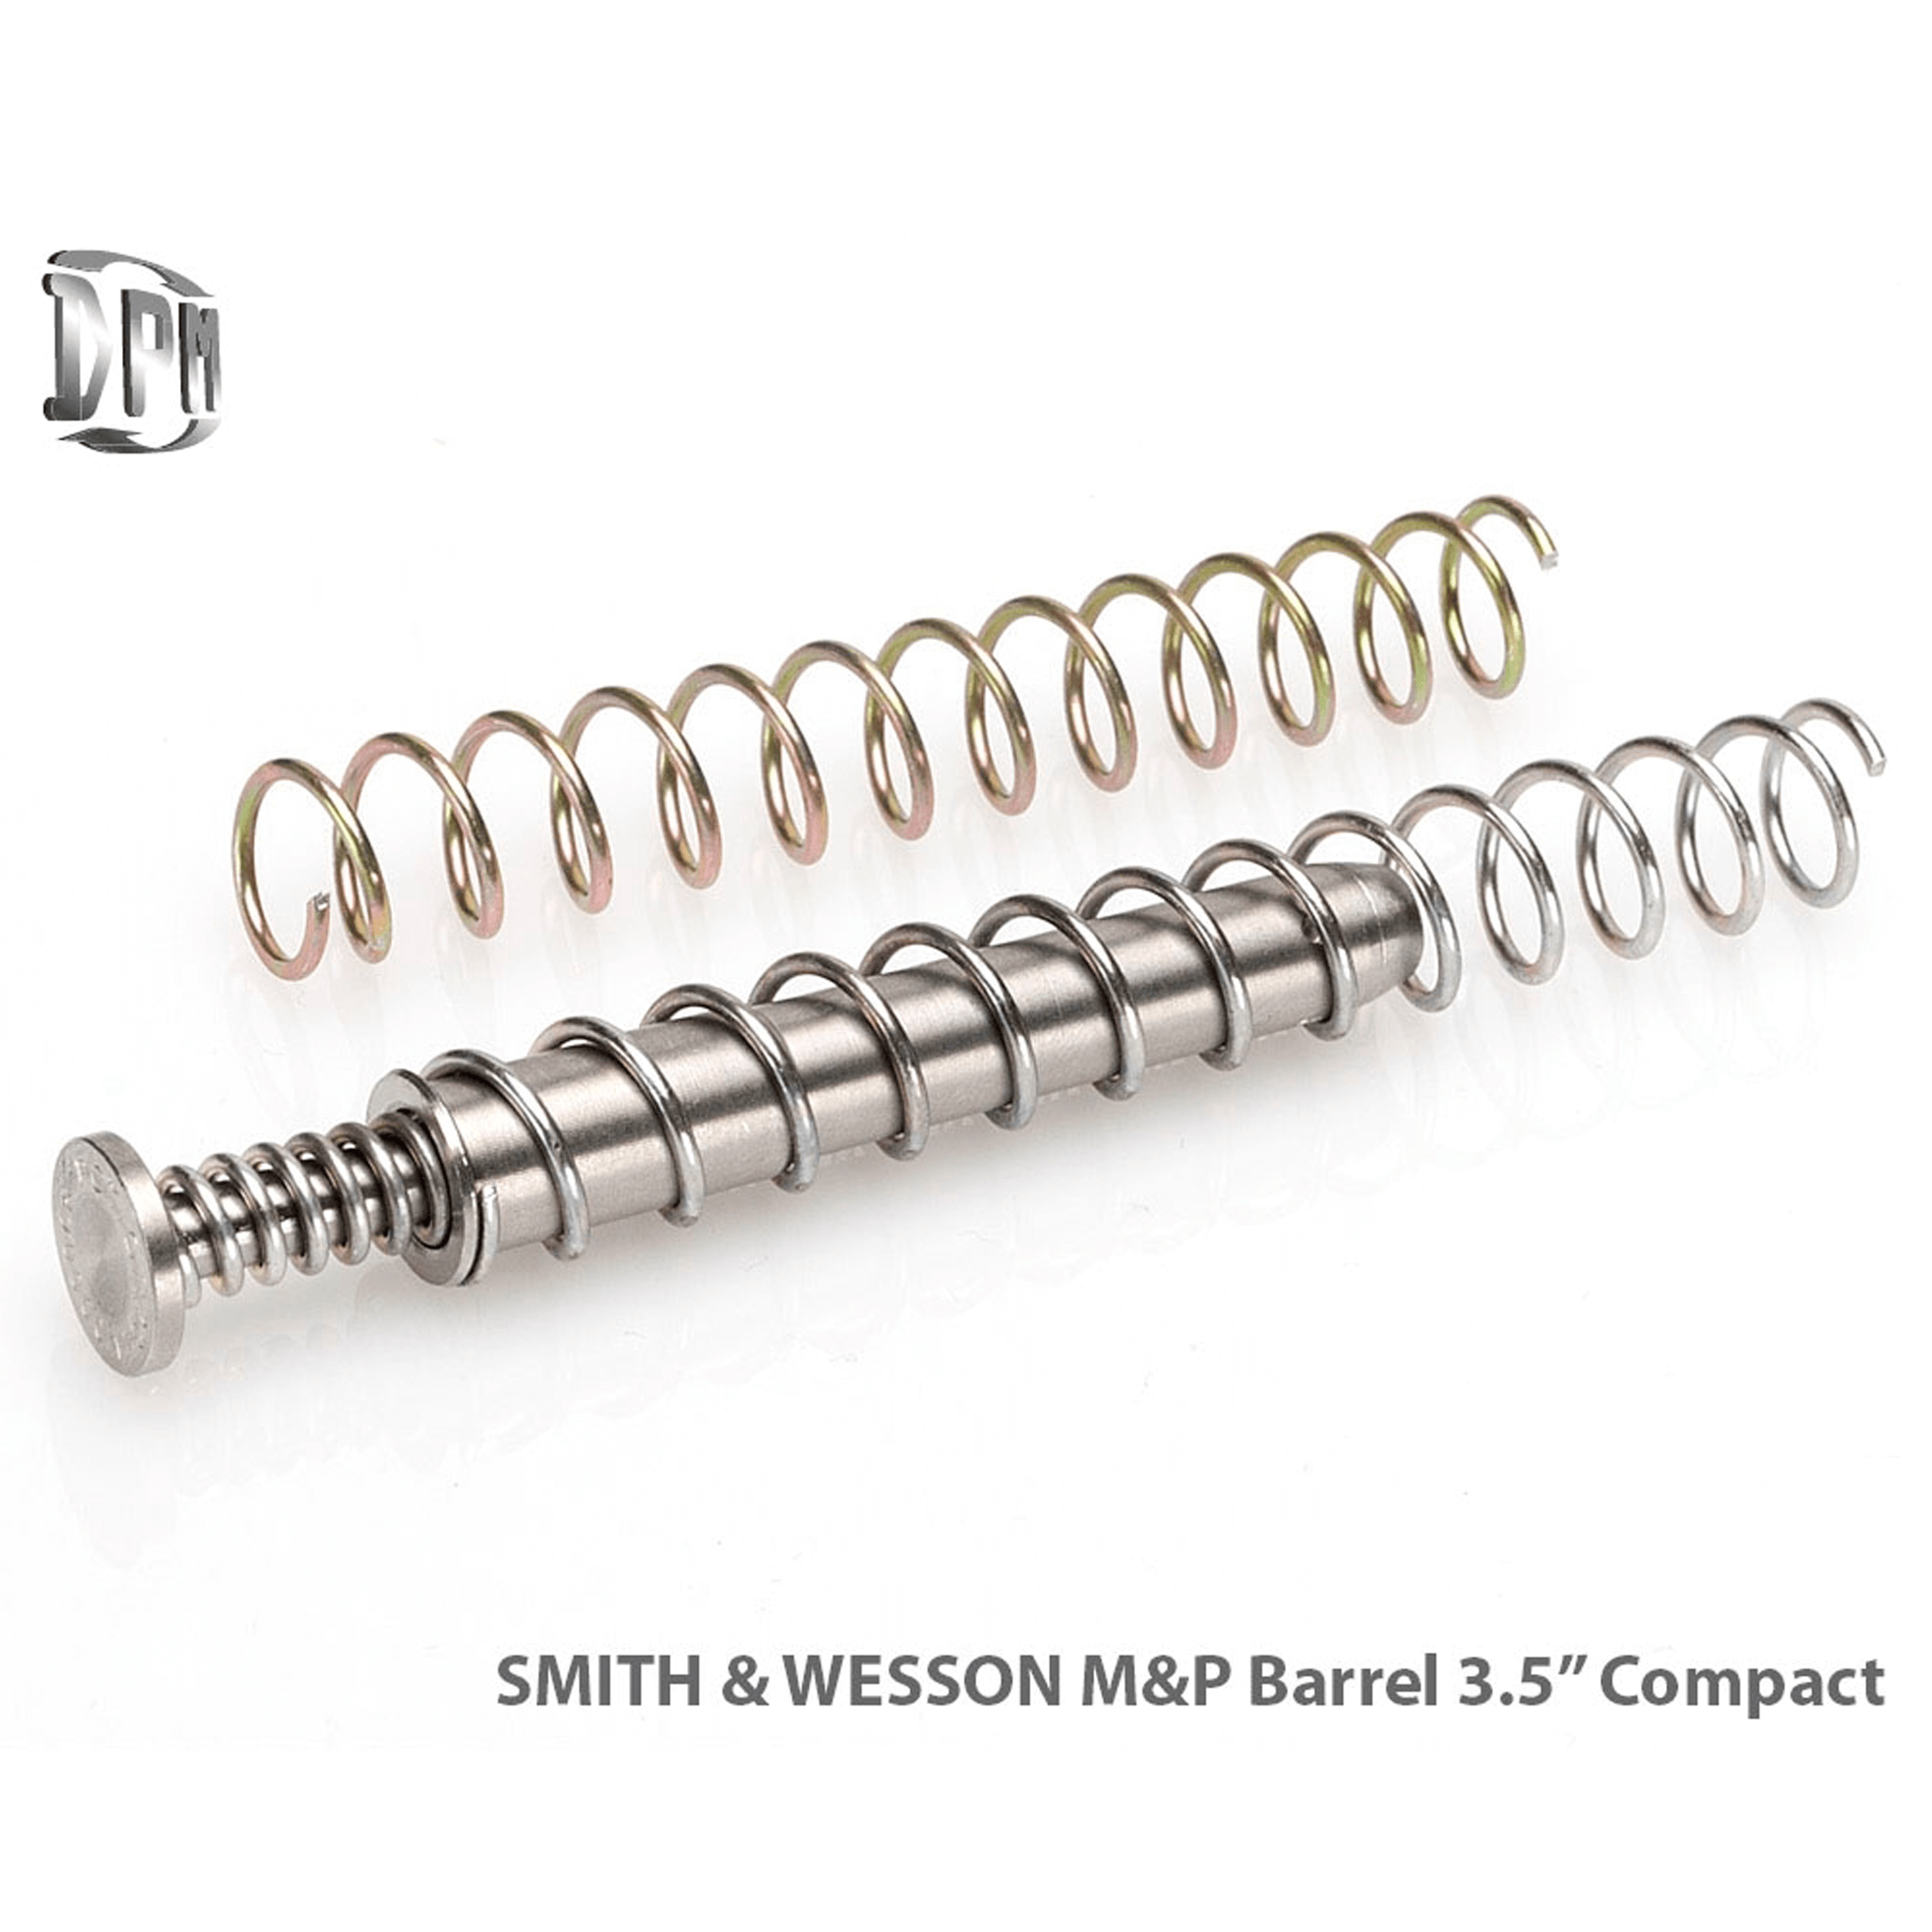 Smith & Wesson M&P Compact Lauflänge 3.5" / 9mm - .40 S&W - .357 SIG